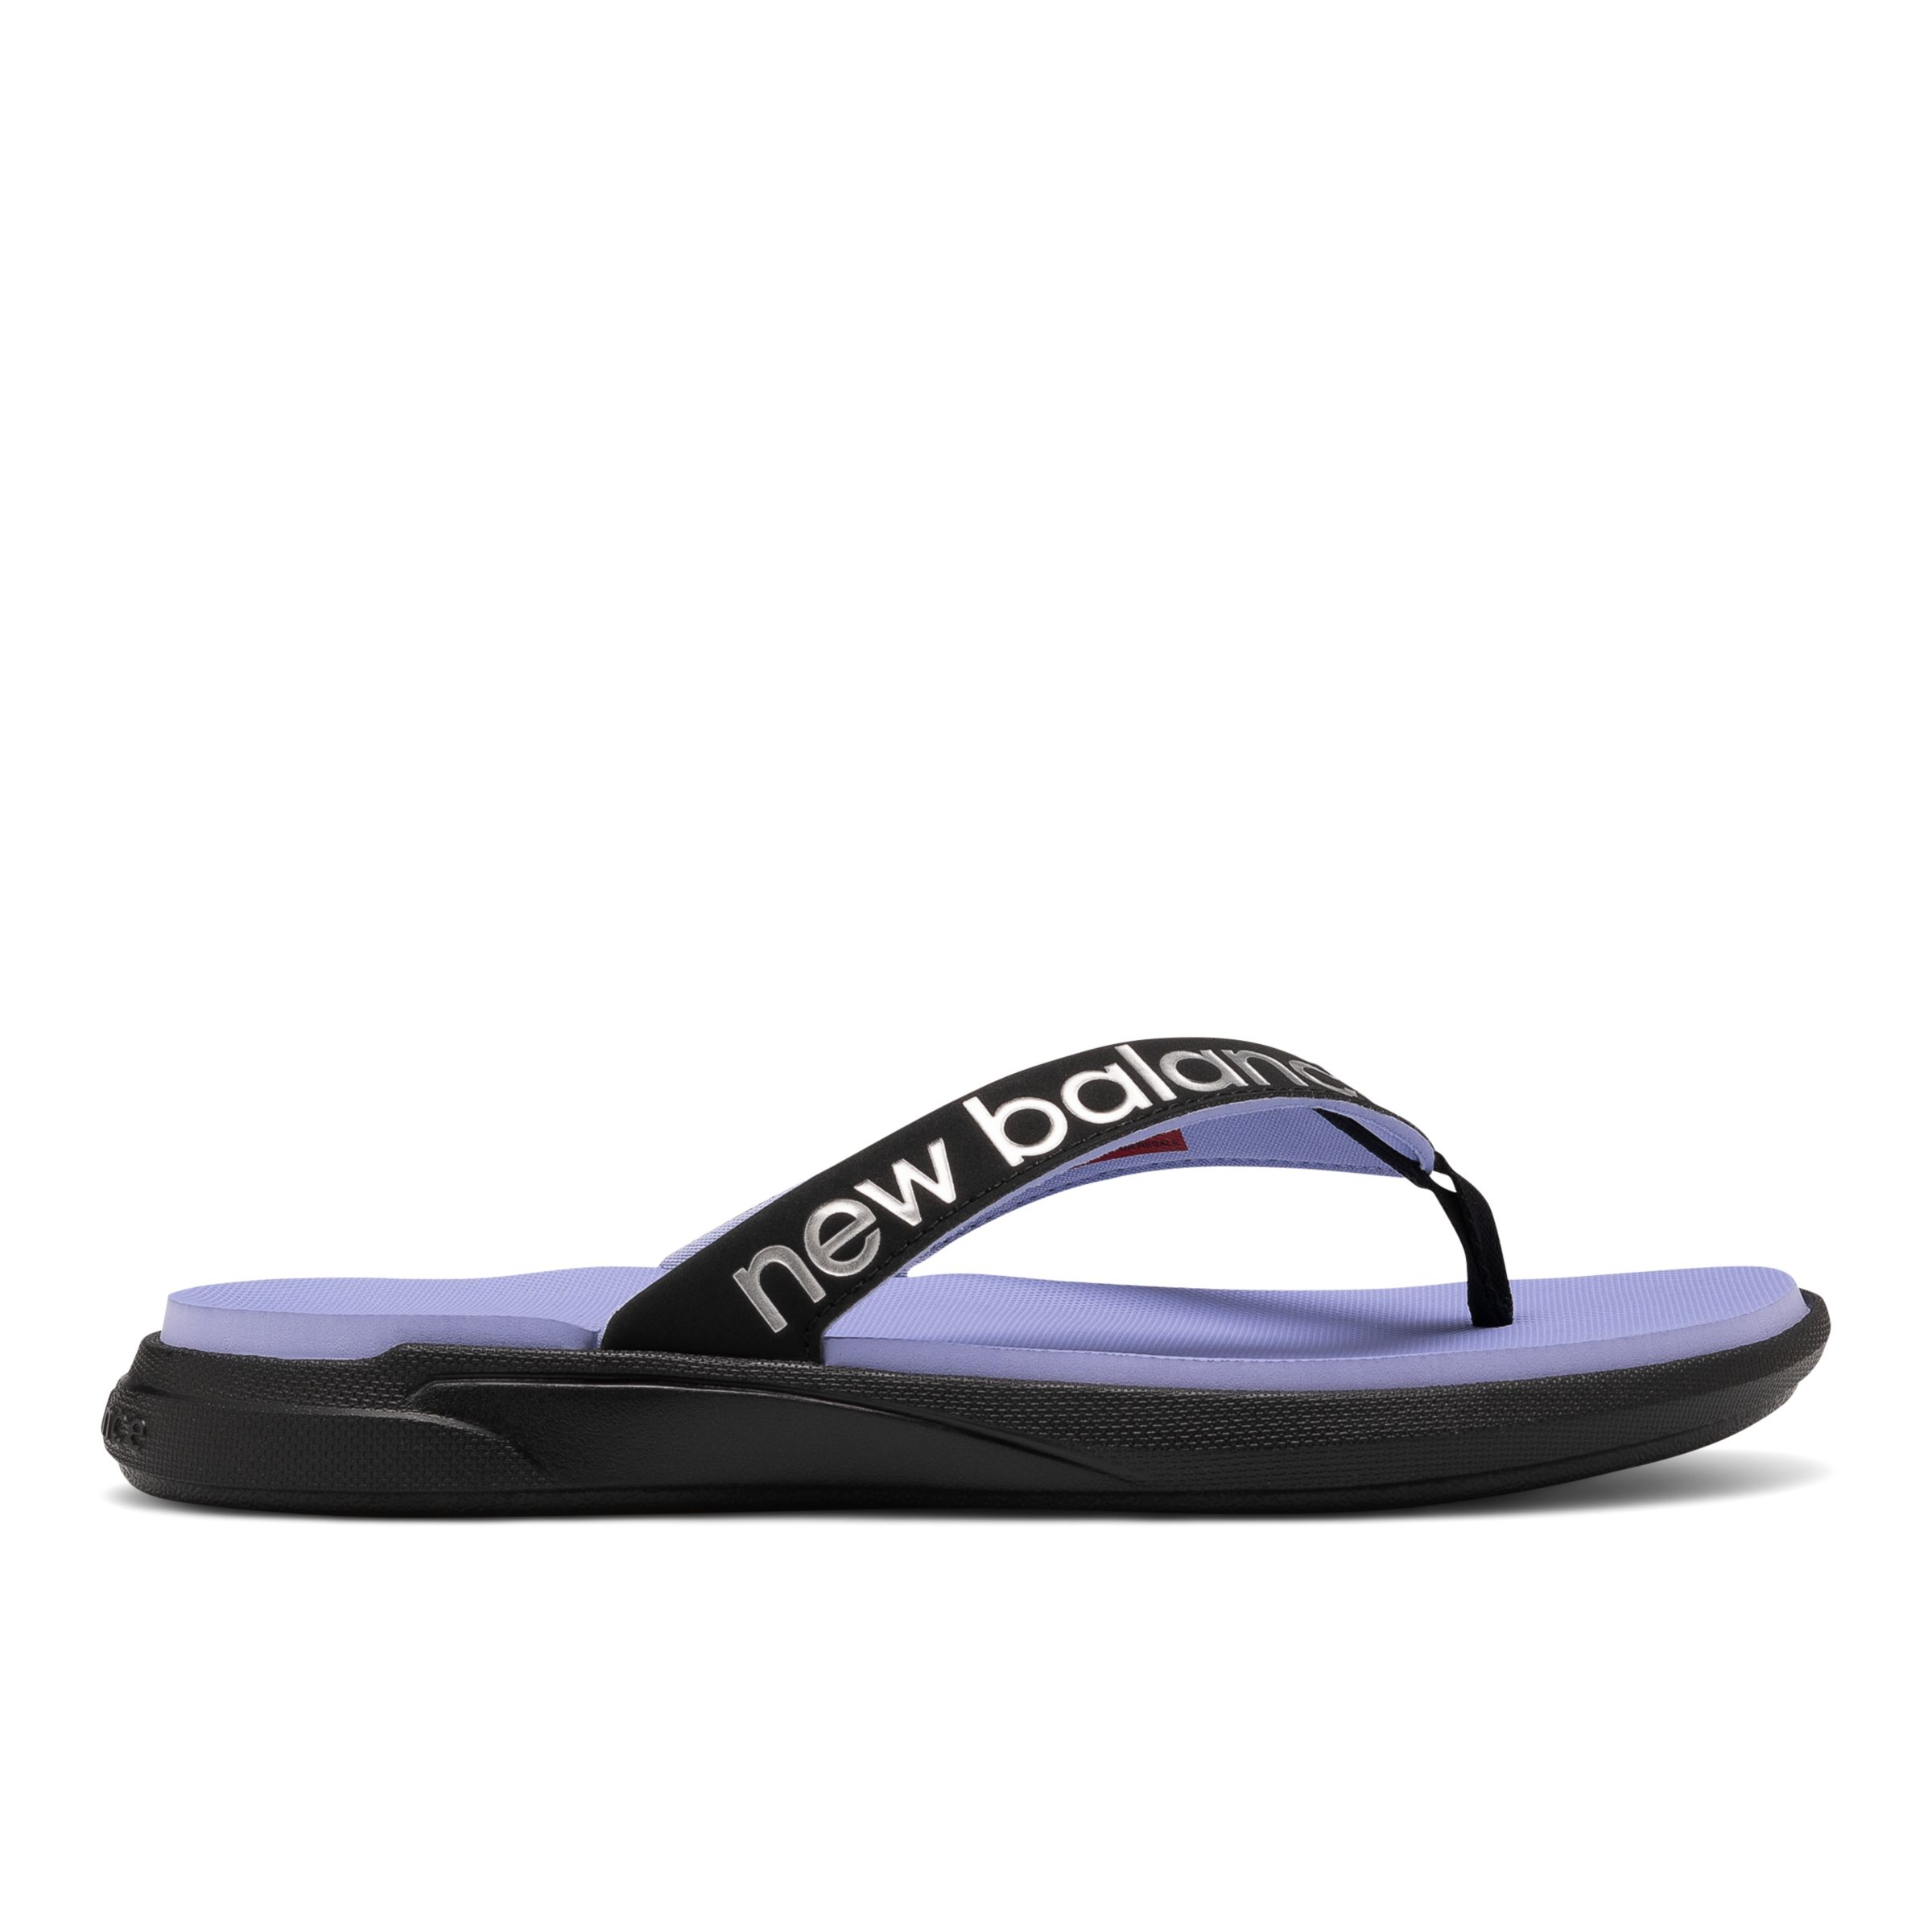 new balance sandals sale